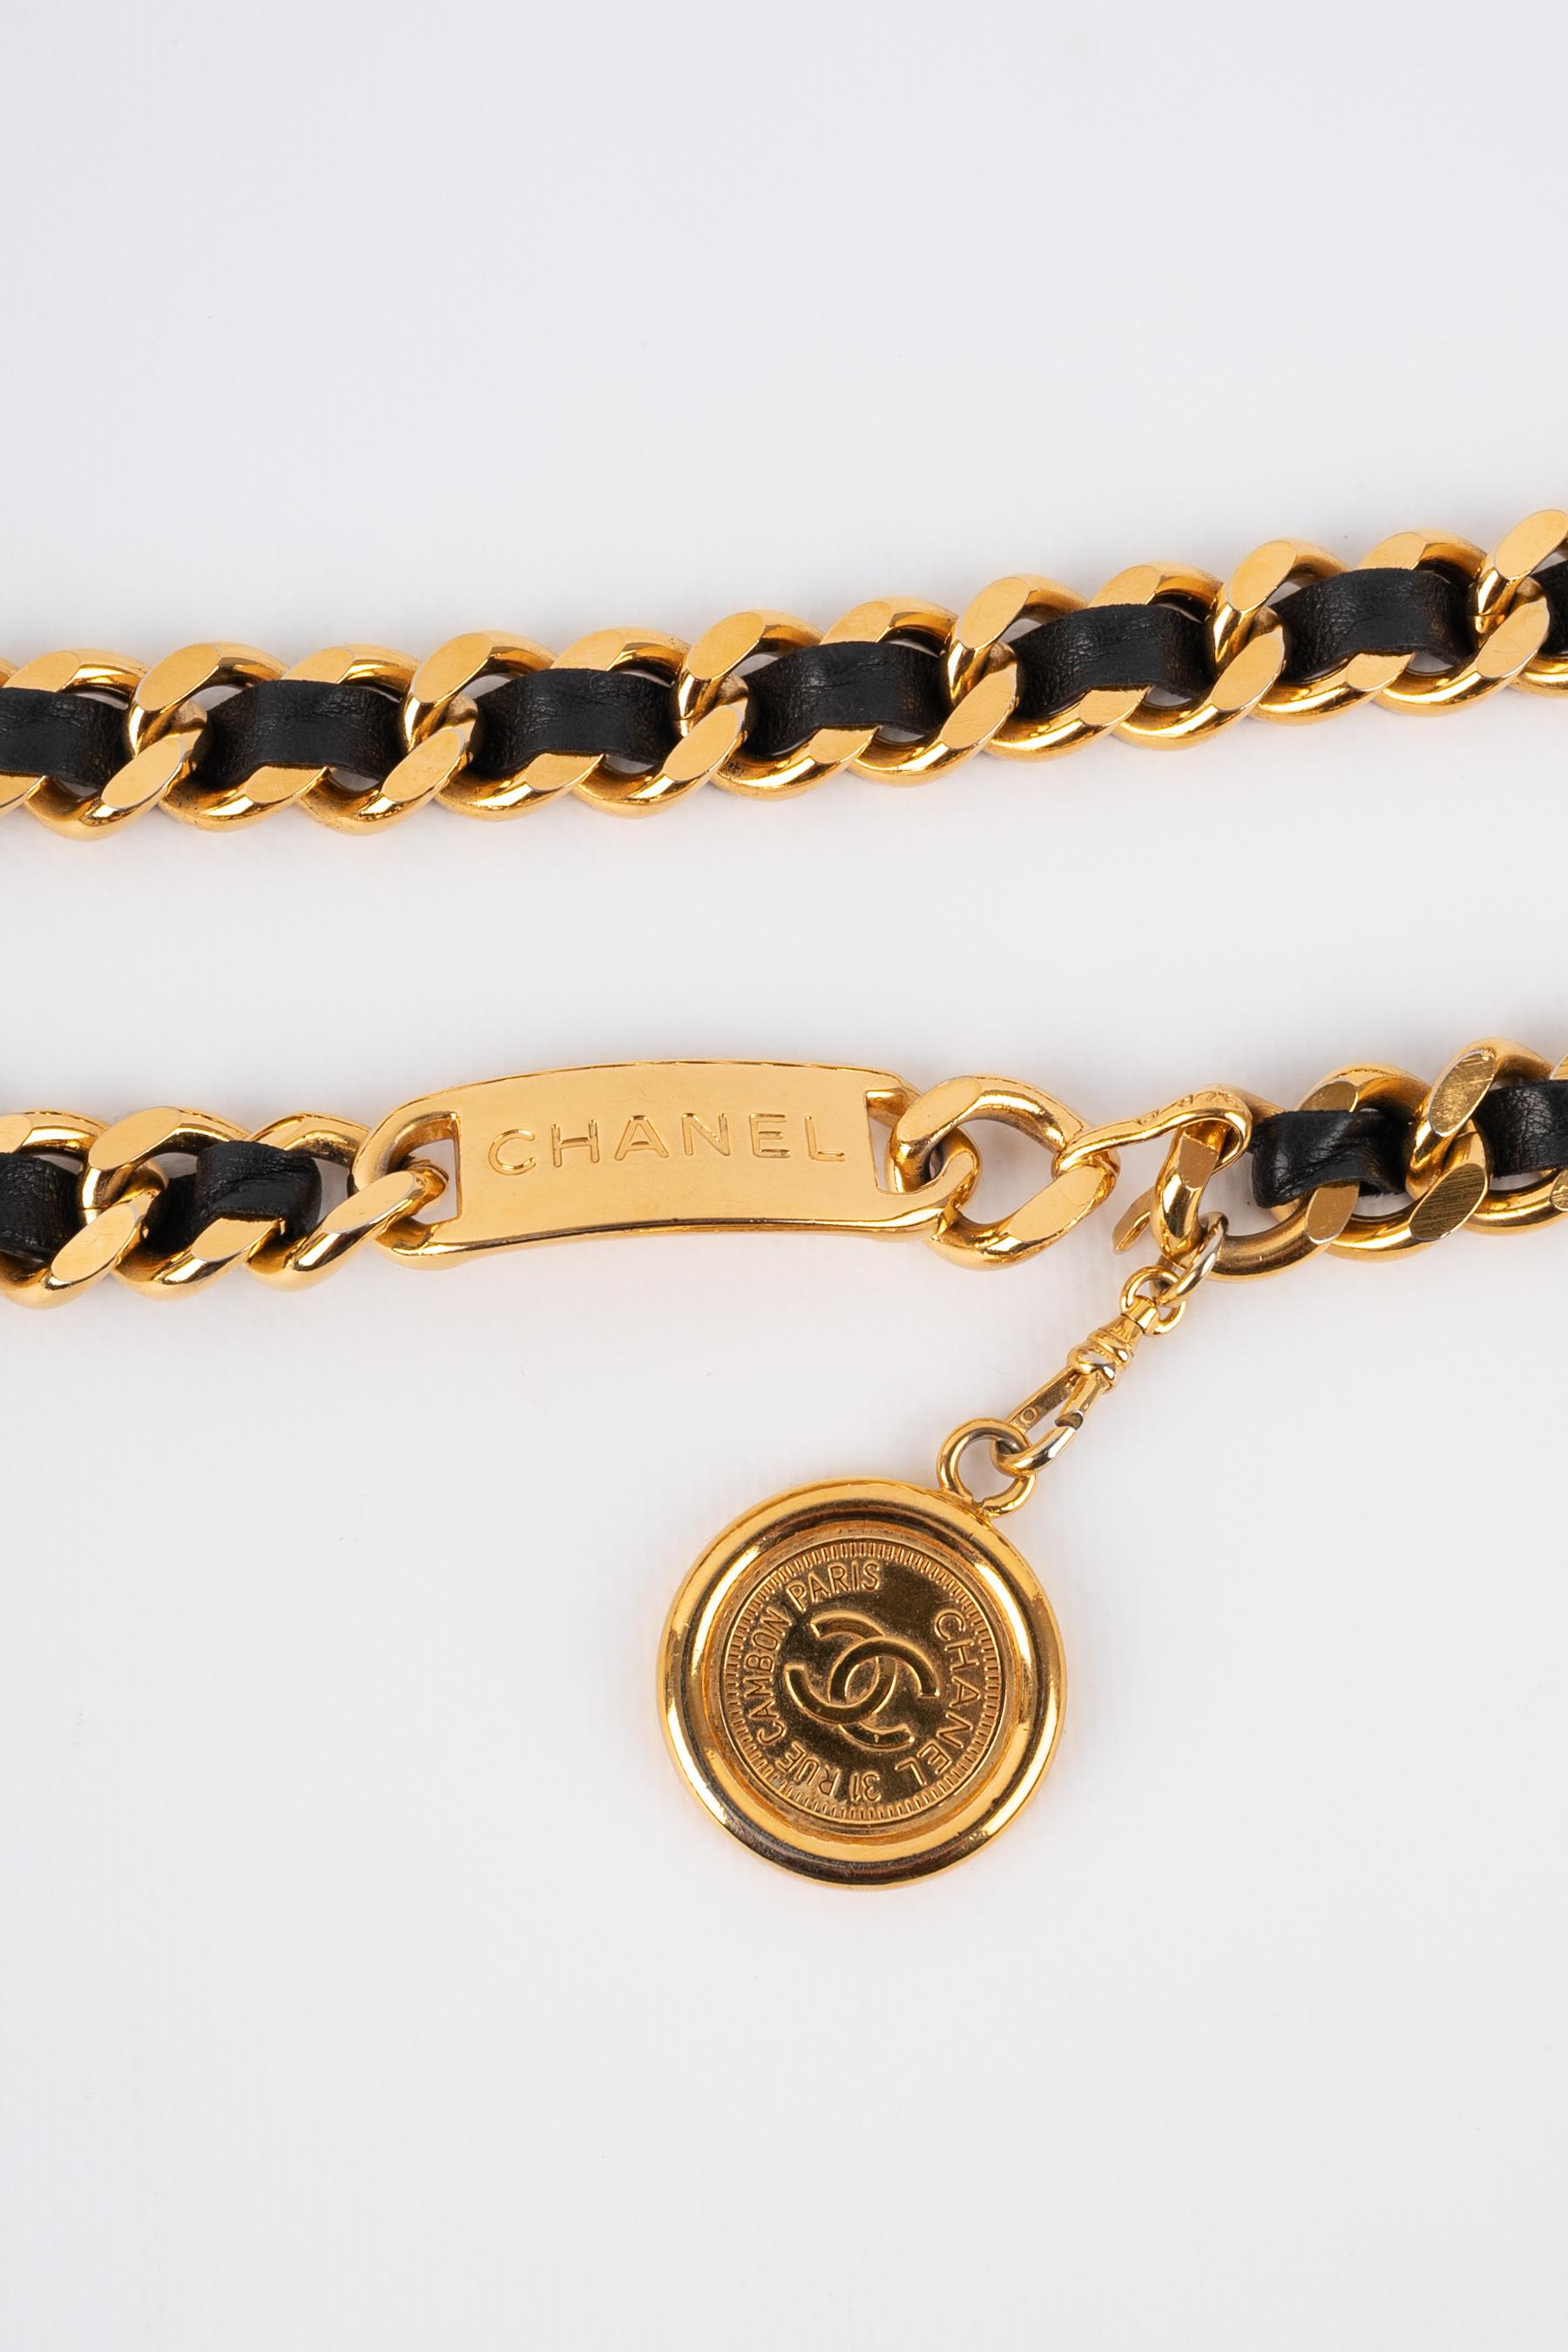 Chanel belt 1980s For Sale 6